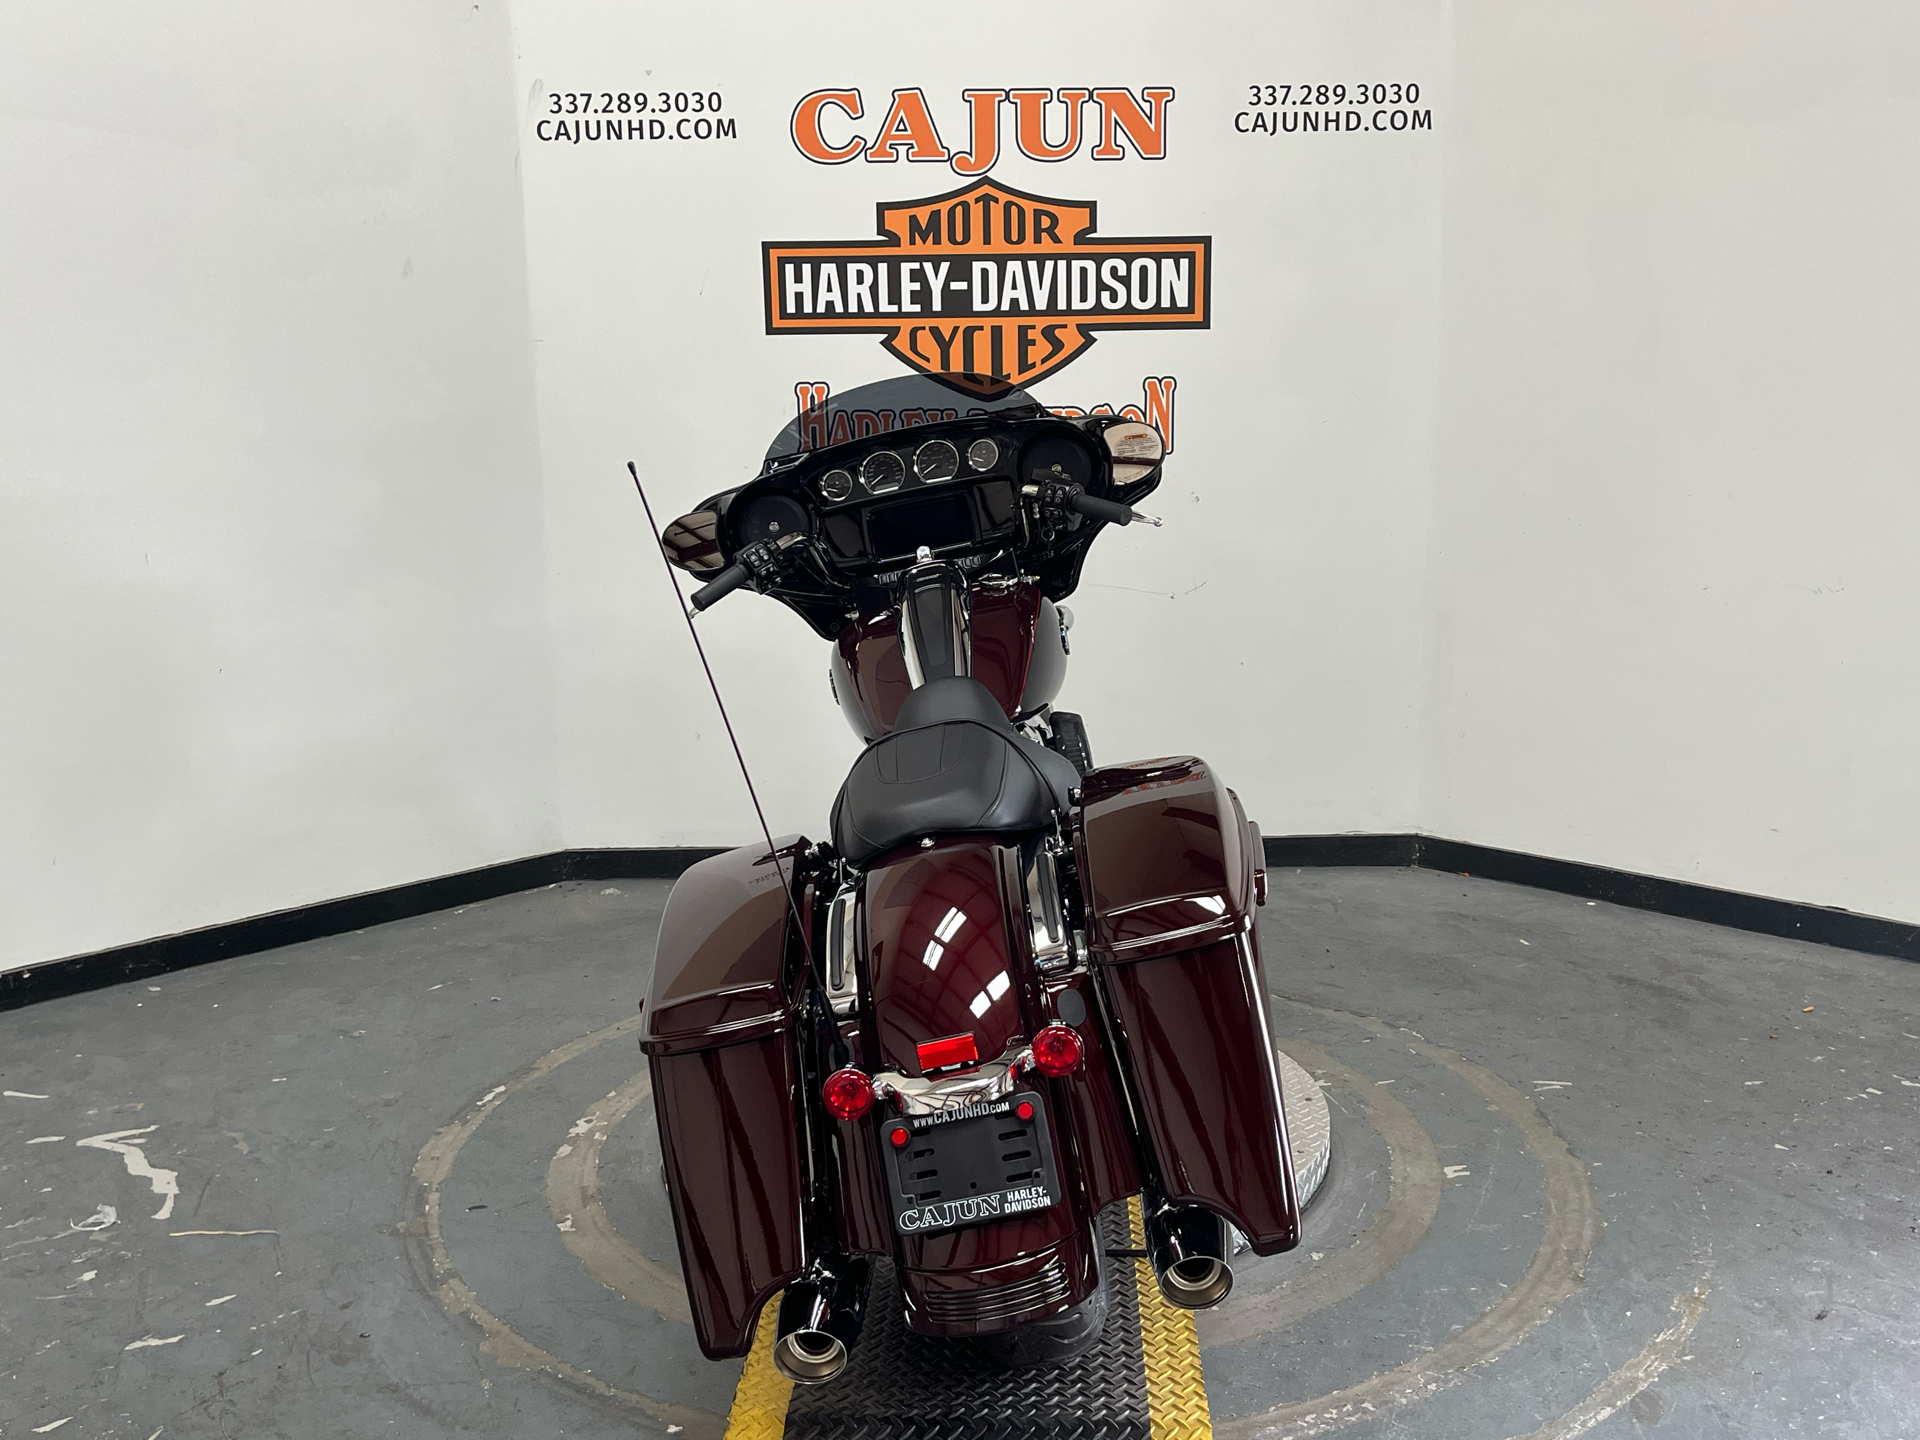 2022 Harley-Davidson Street Glide Special near me - Photo 4